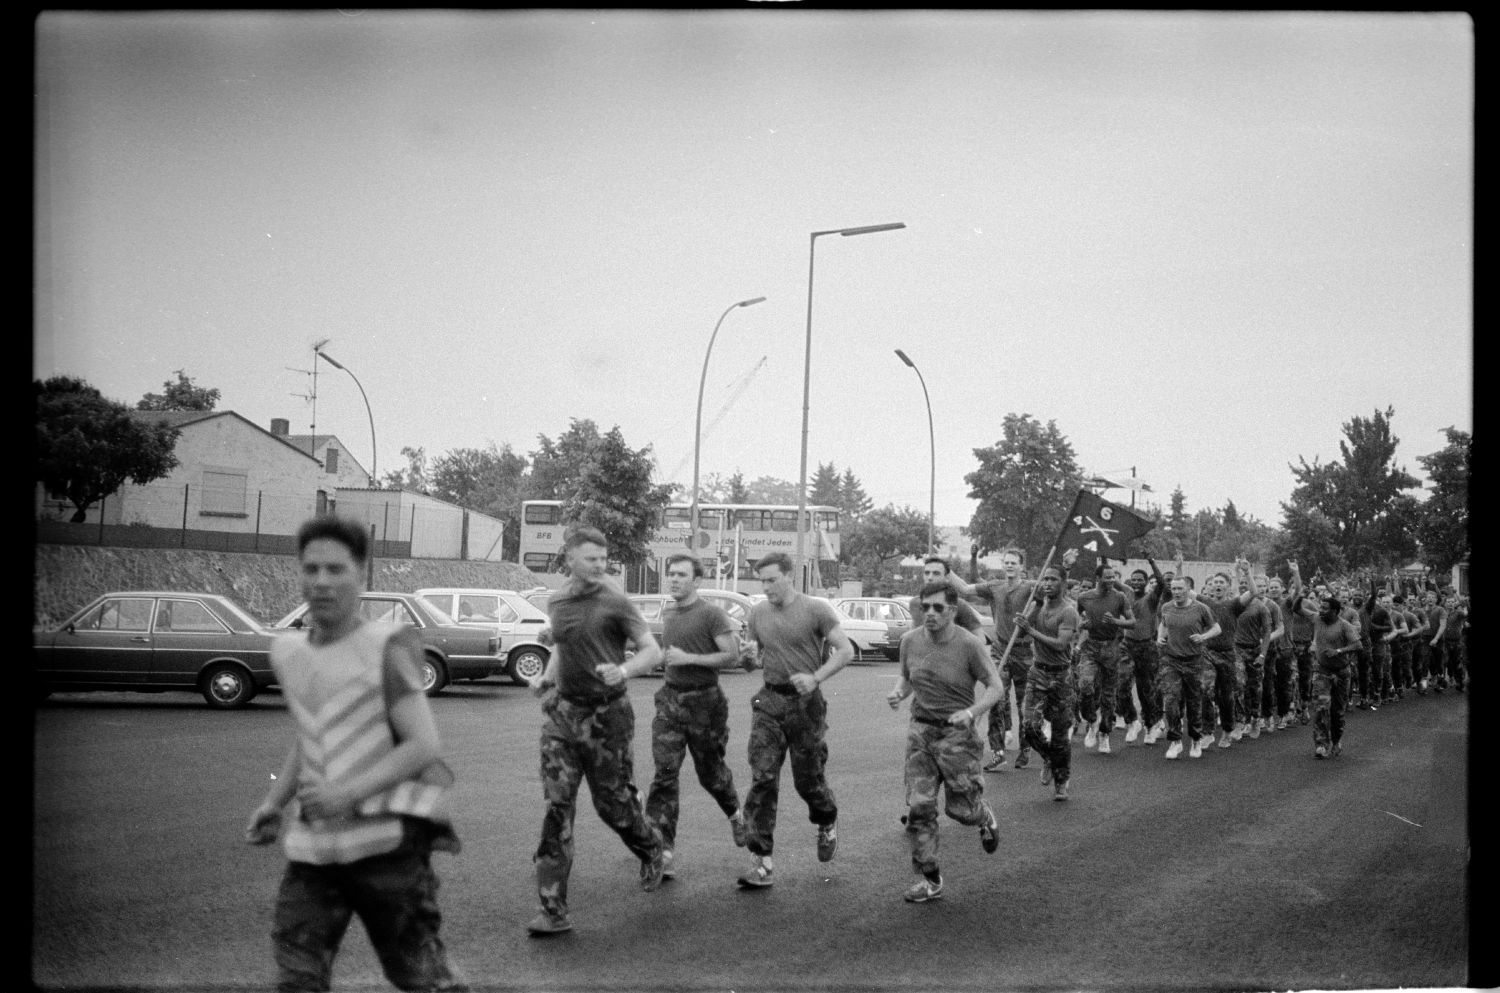 s/w-Fotografie: Brigade Run der U.S. Army Berlin Brigade in den McNair Barracks in Berlin-Lichterfelde (AlliiertenMuseum/U.S. Army Photograph Public Domain Mark)